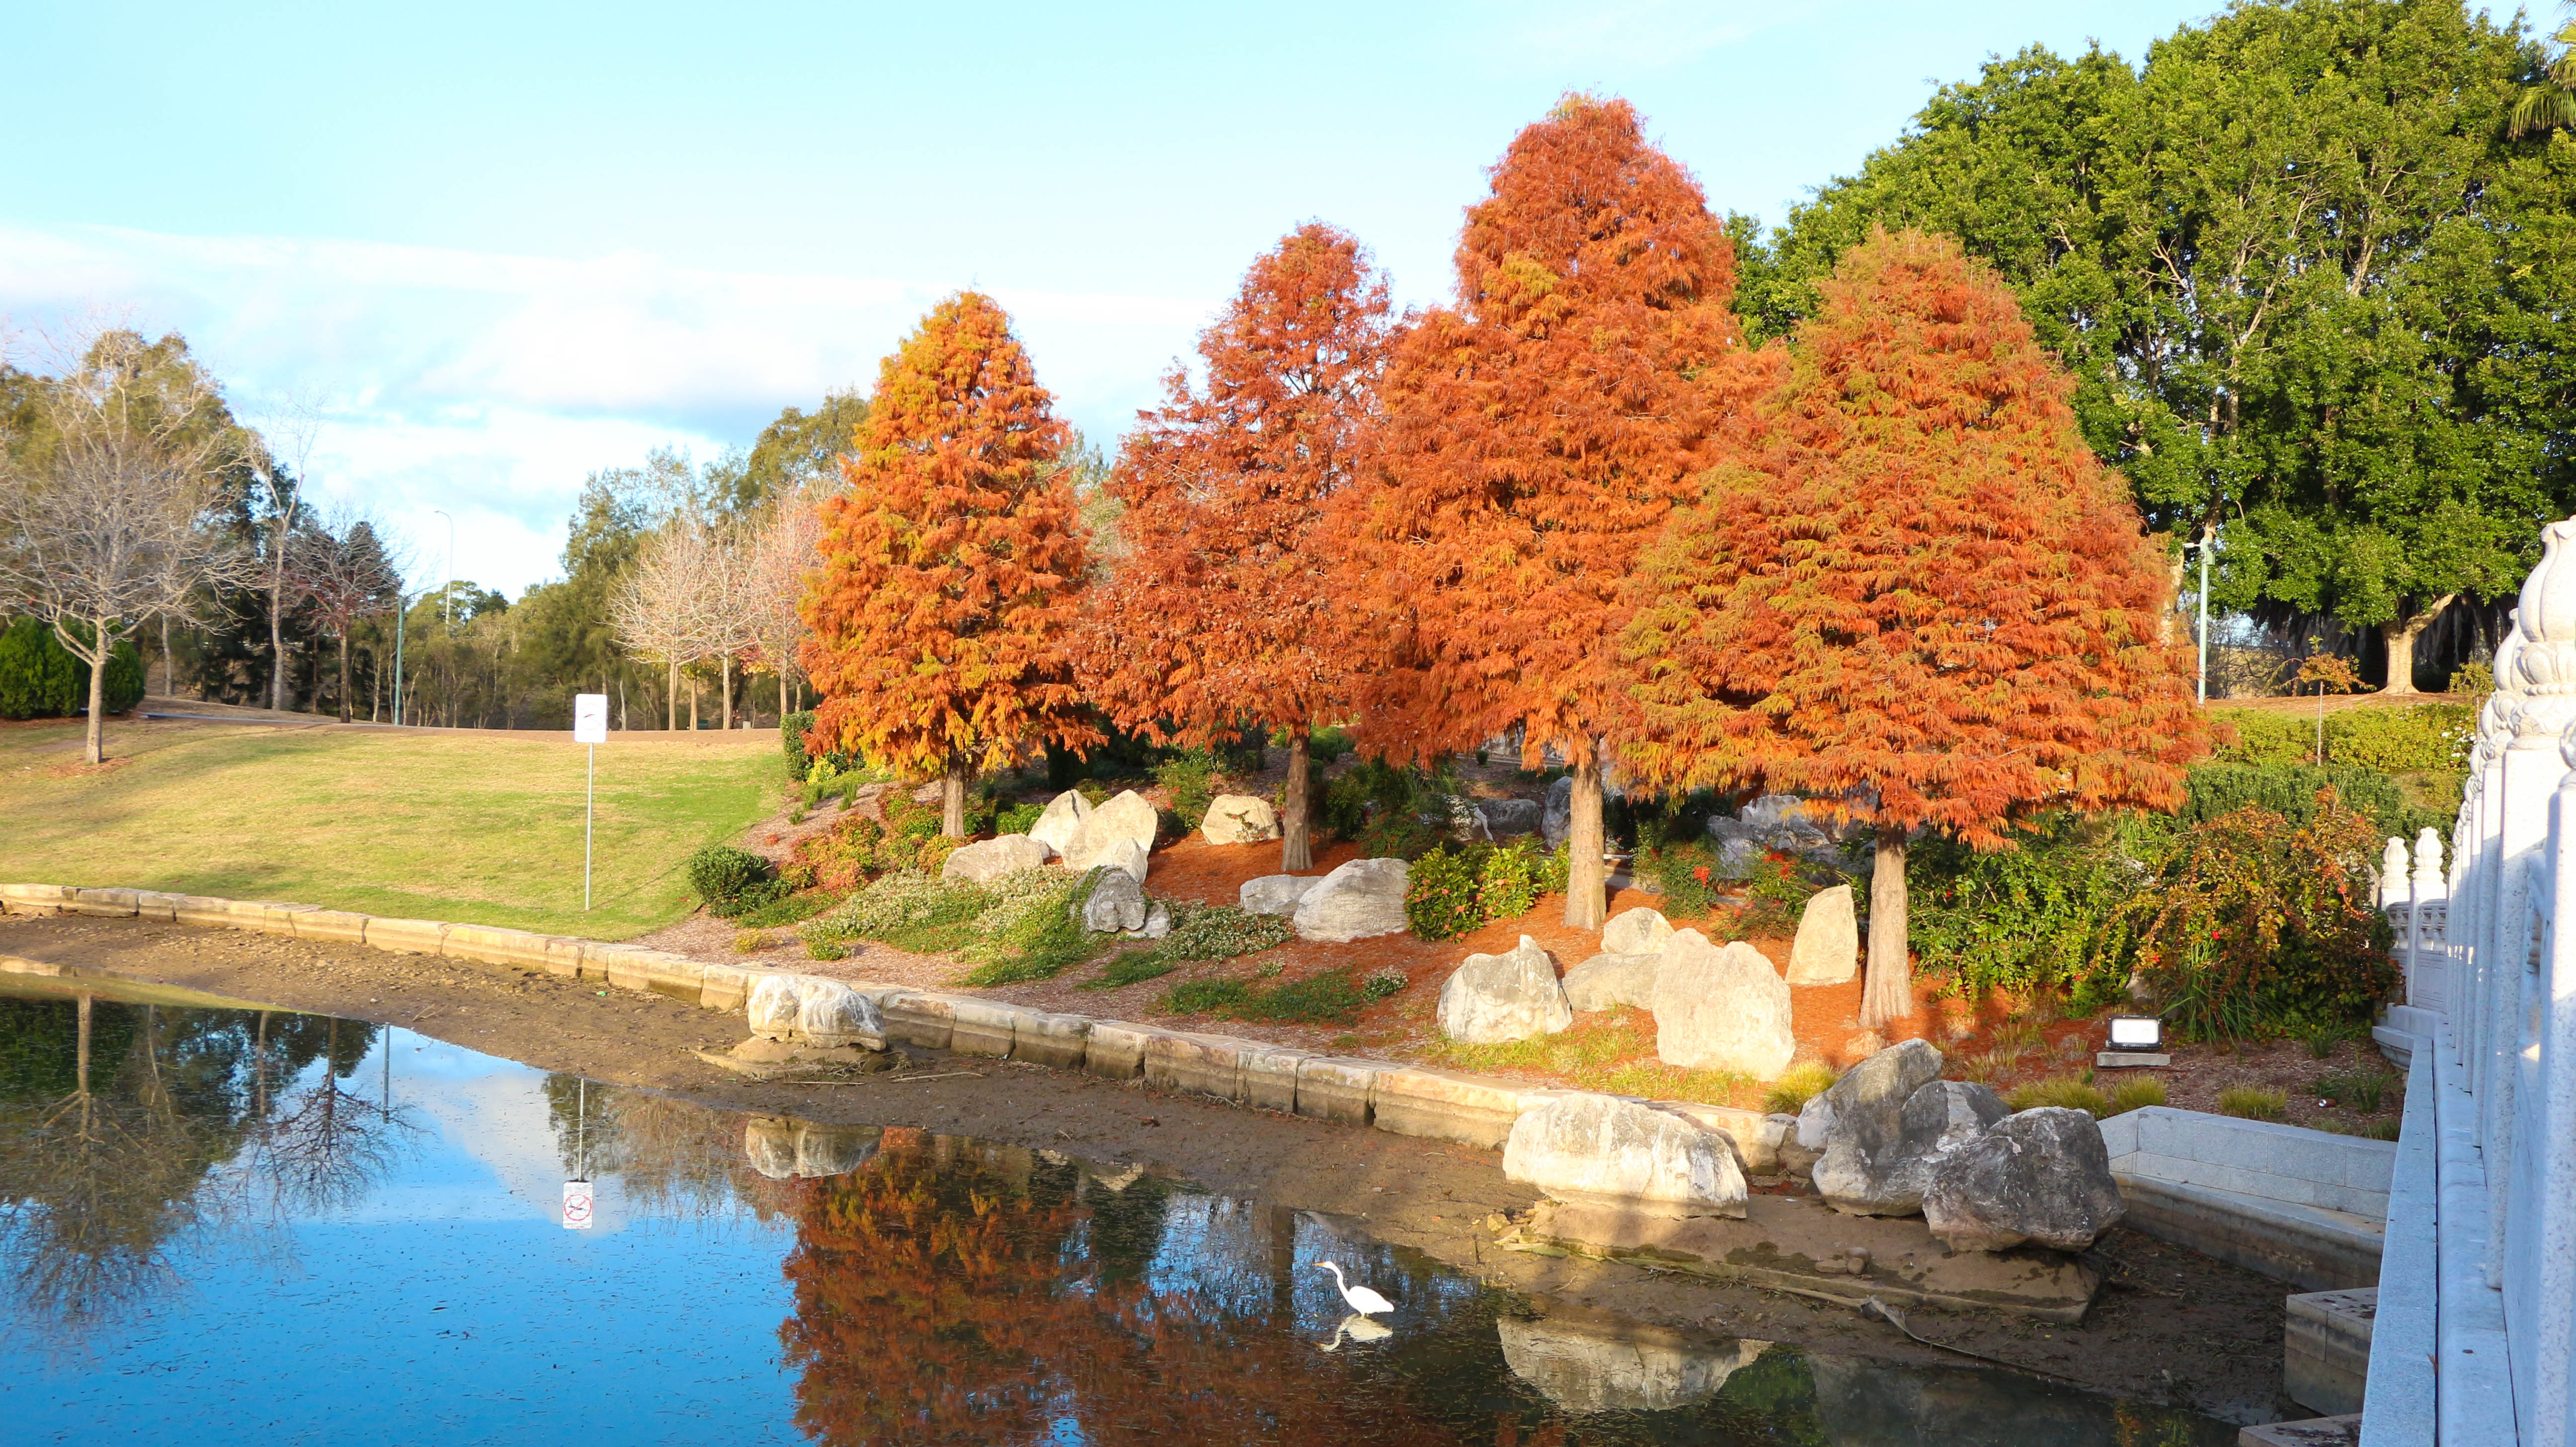 Autumn Trees at Nurragingy Park